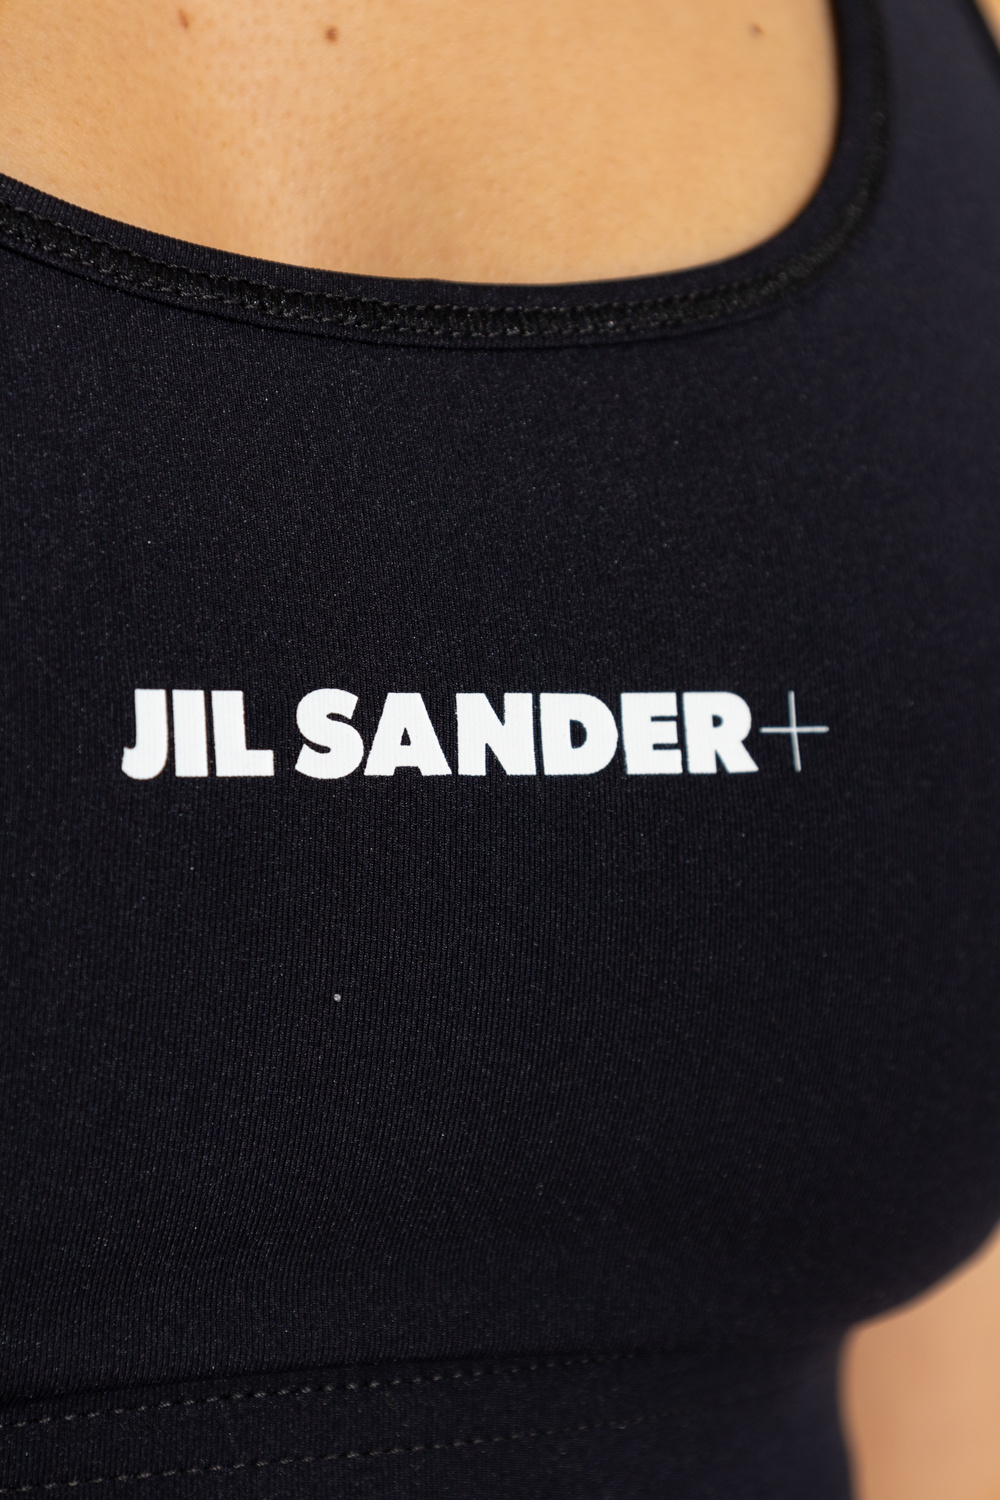 JIL SANDER+ Туфли женские кожаные на шнурках в стиле jil sander